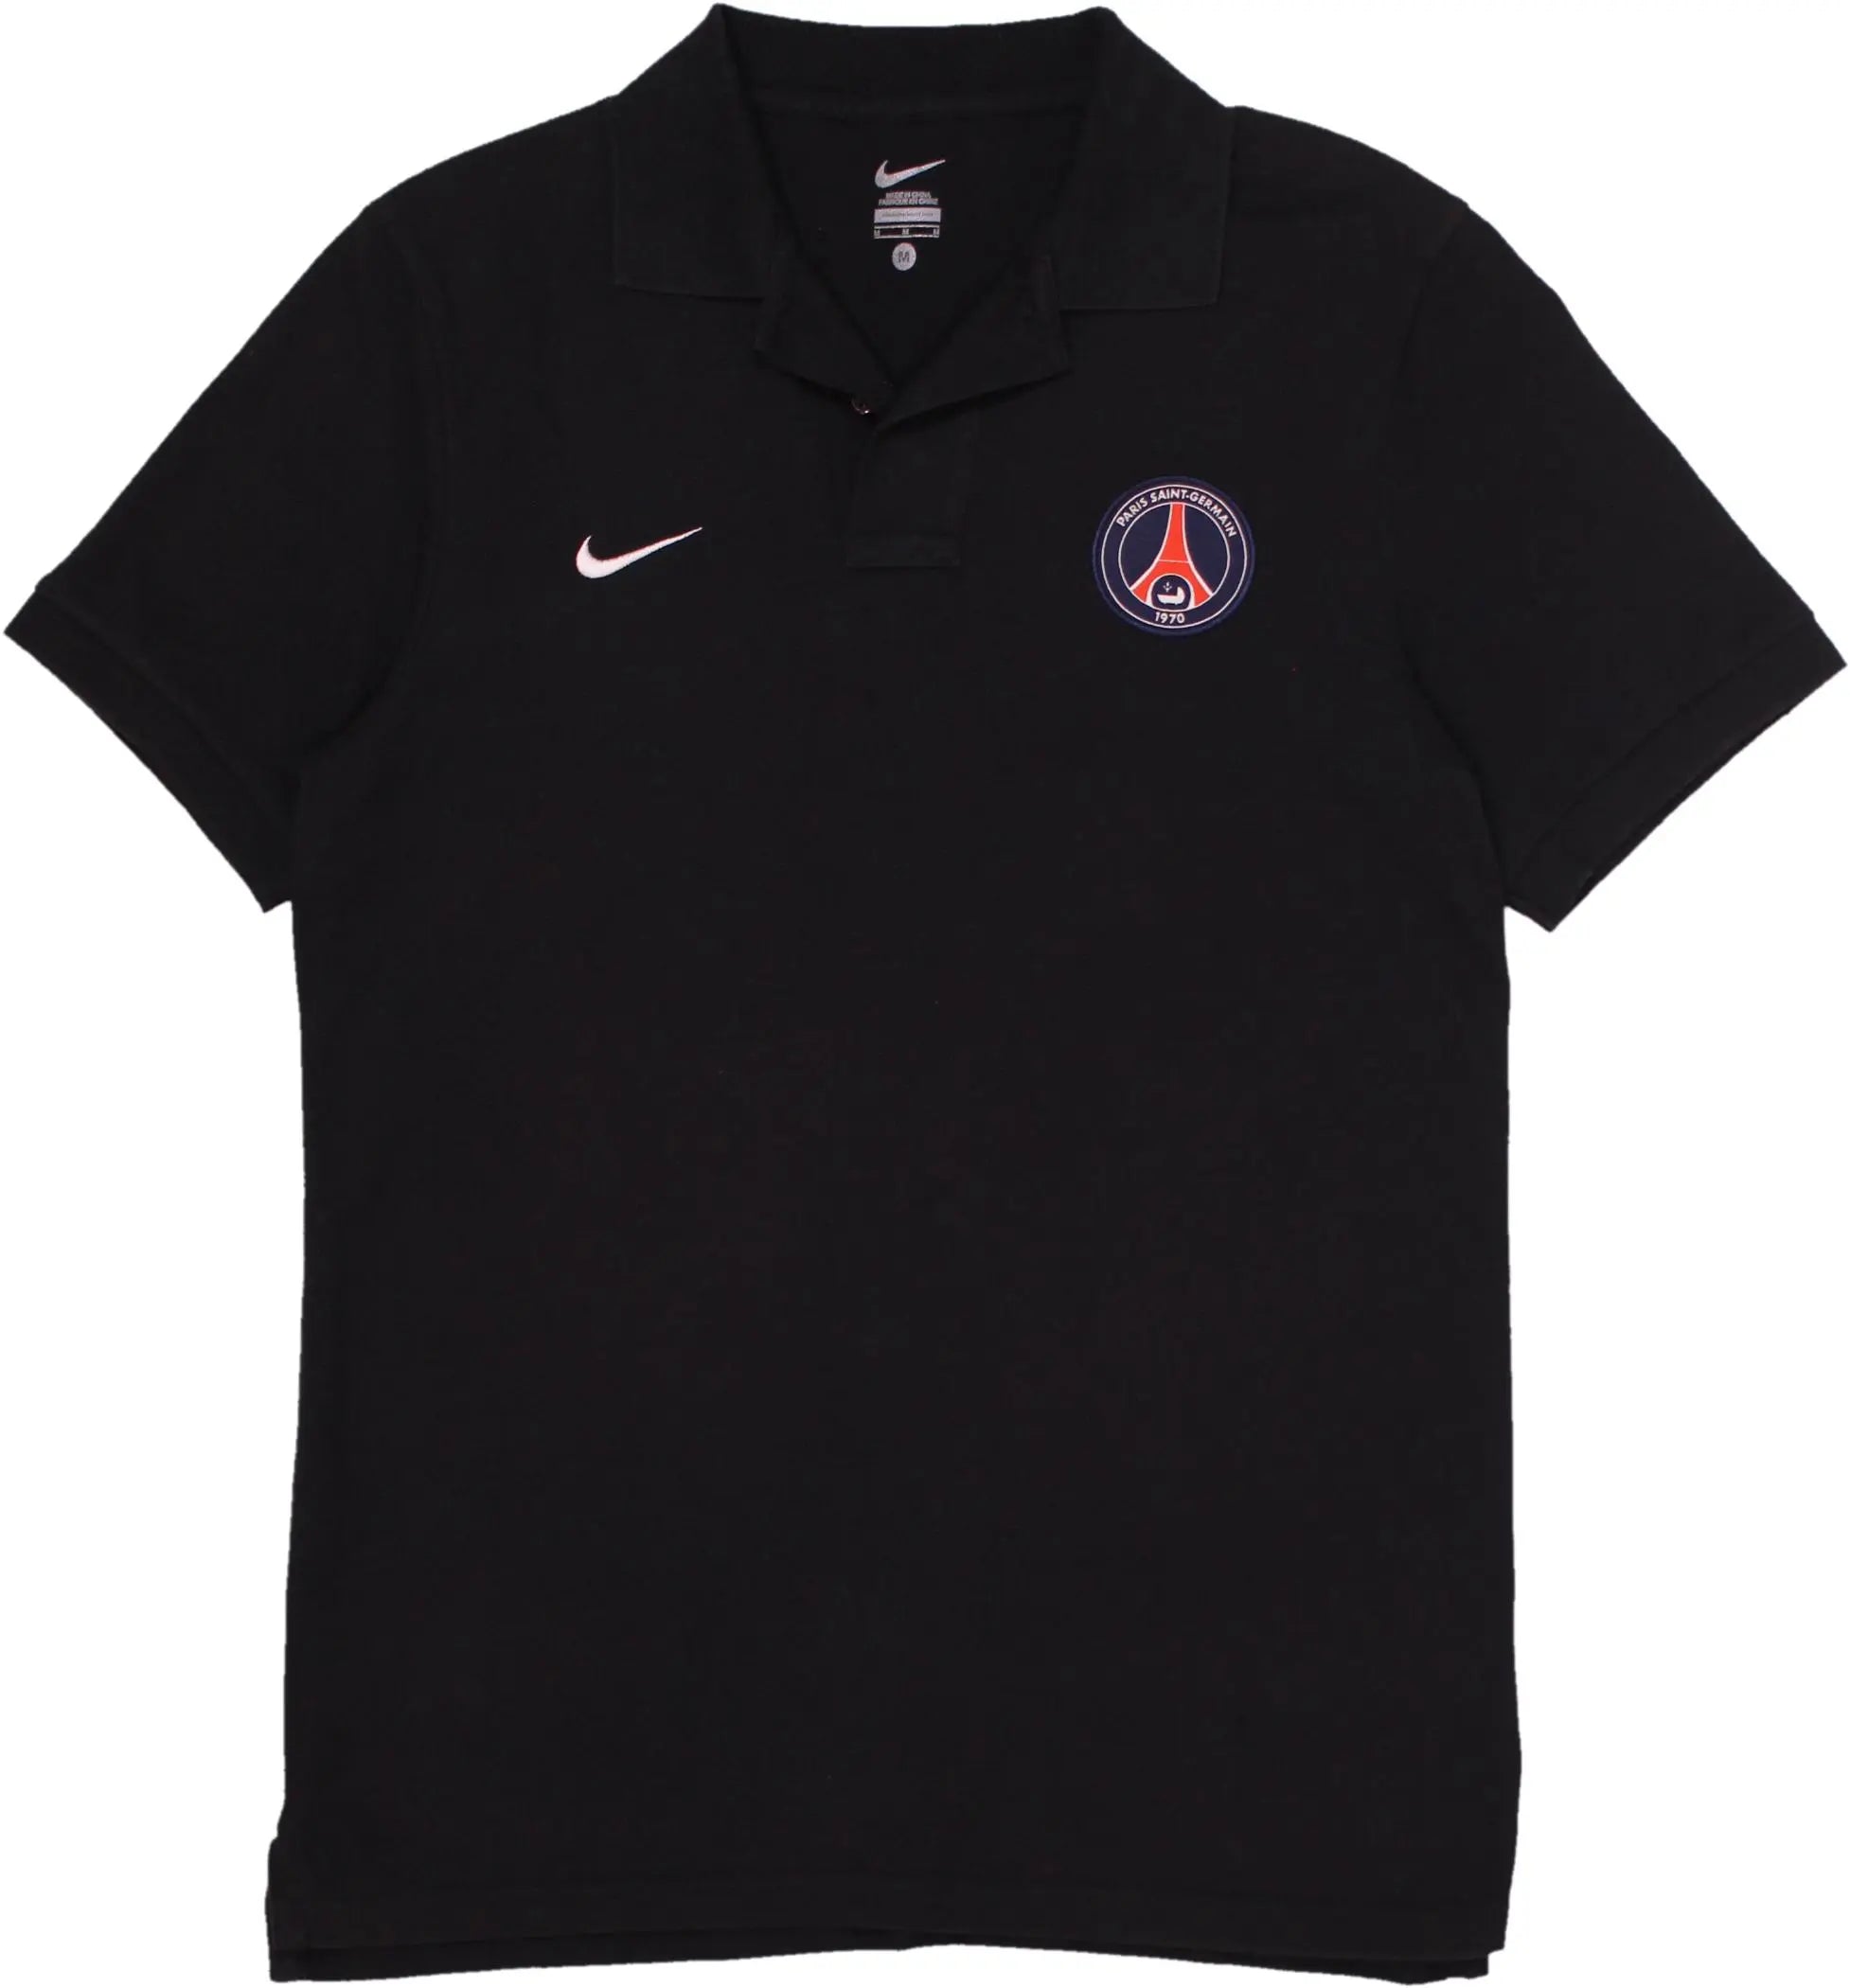 Nike - Paris Saint-Germain Polo Shirt- ThriftTale.com - Vintage and second handclothing